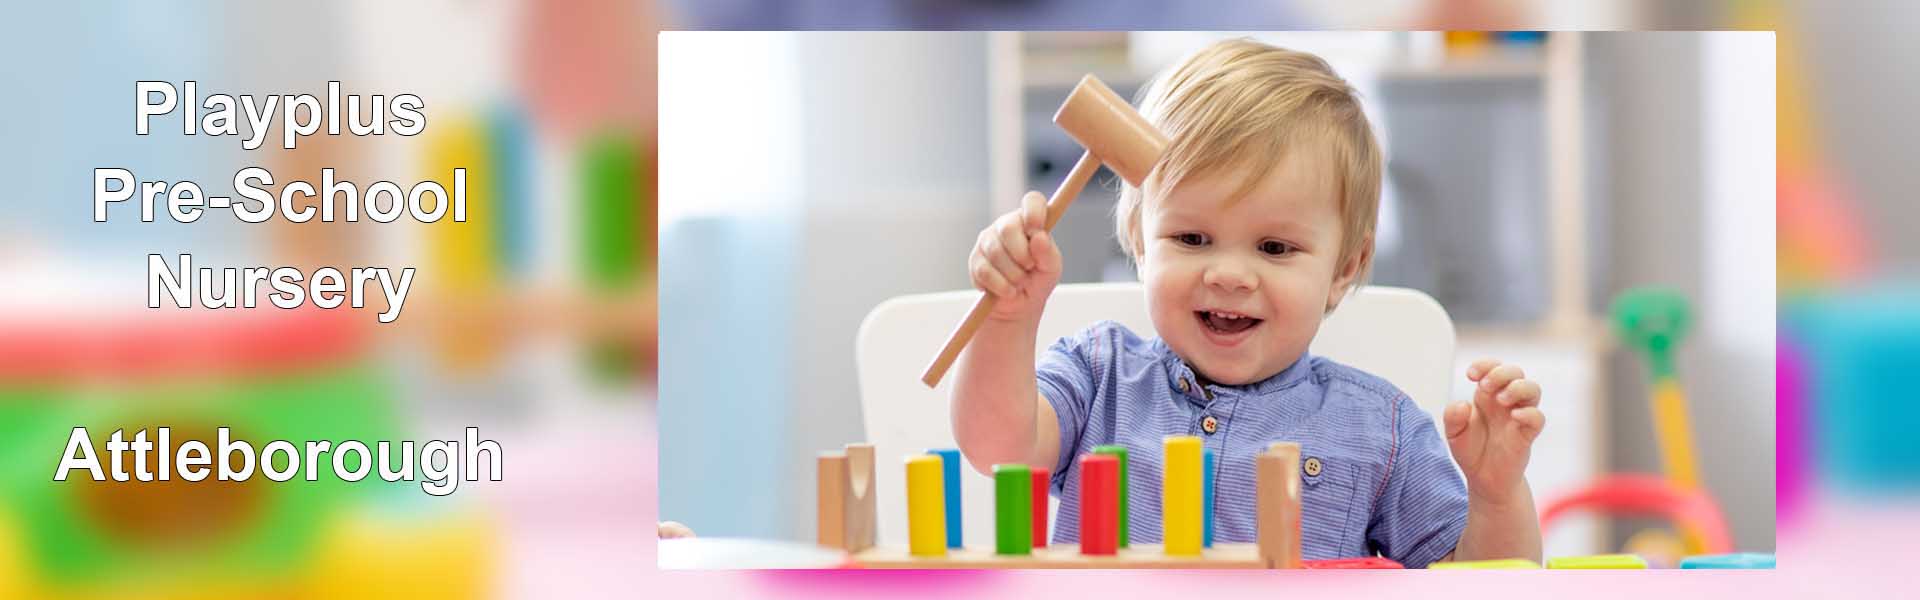 Playplus Nursery Attleborough - toddler playing with peg hammer